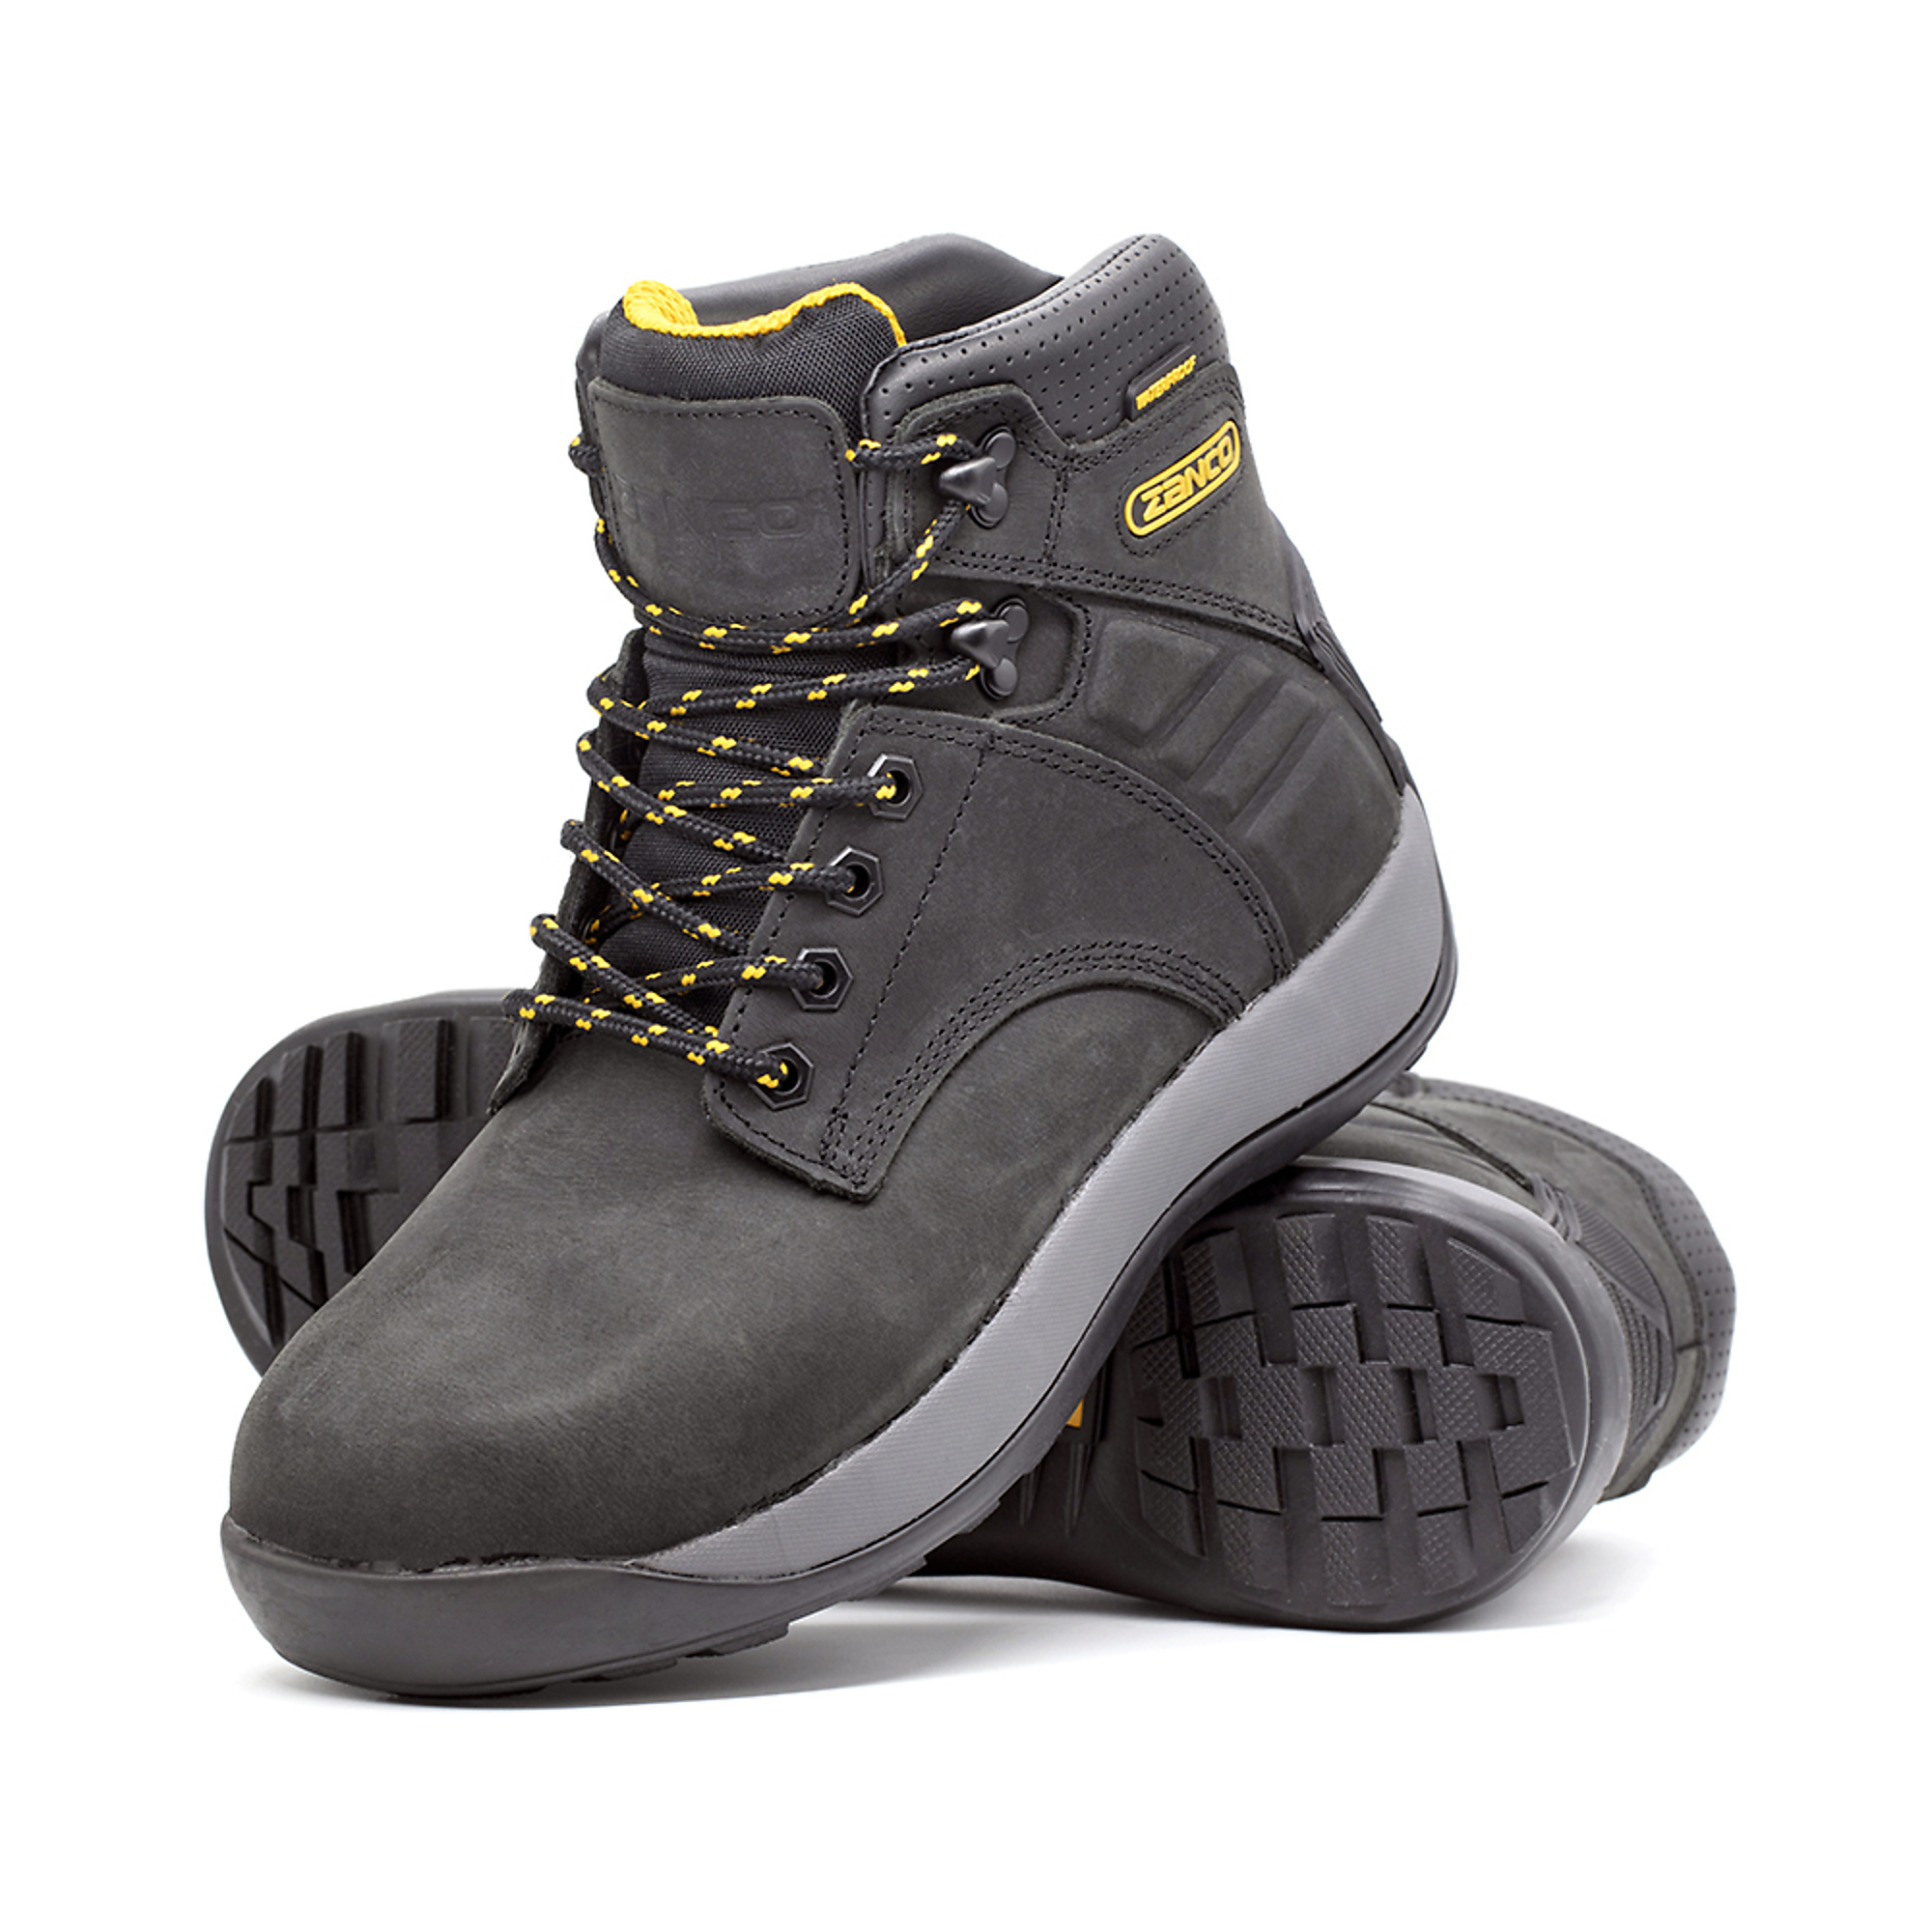 Zanco, Men's Waterproof,Steel toe,EH,Safety boots, Size 9, Width Medium, Color BLACK, Model 8236-01-9